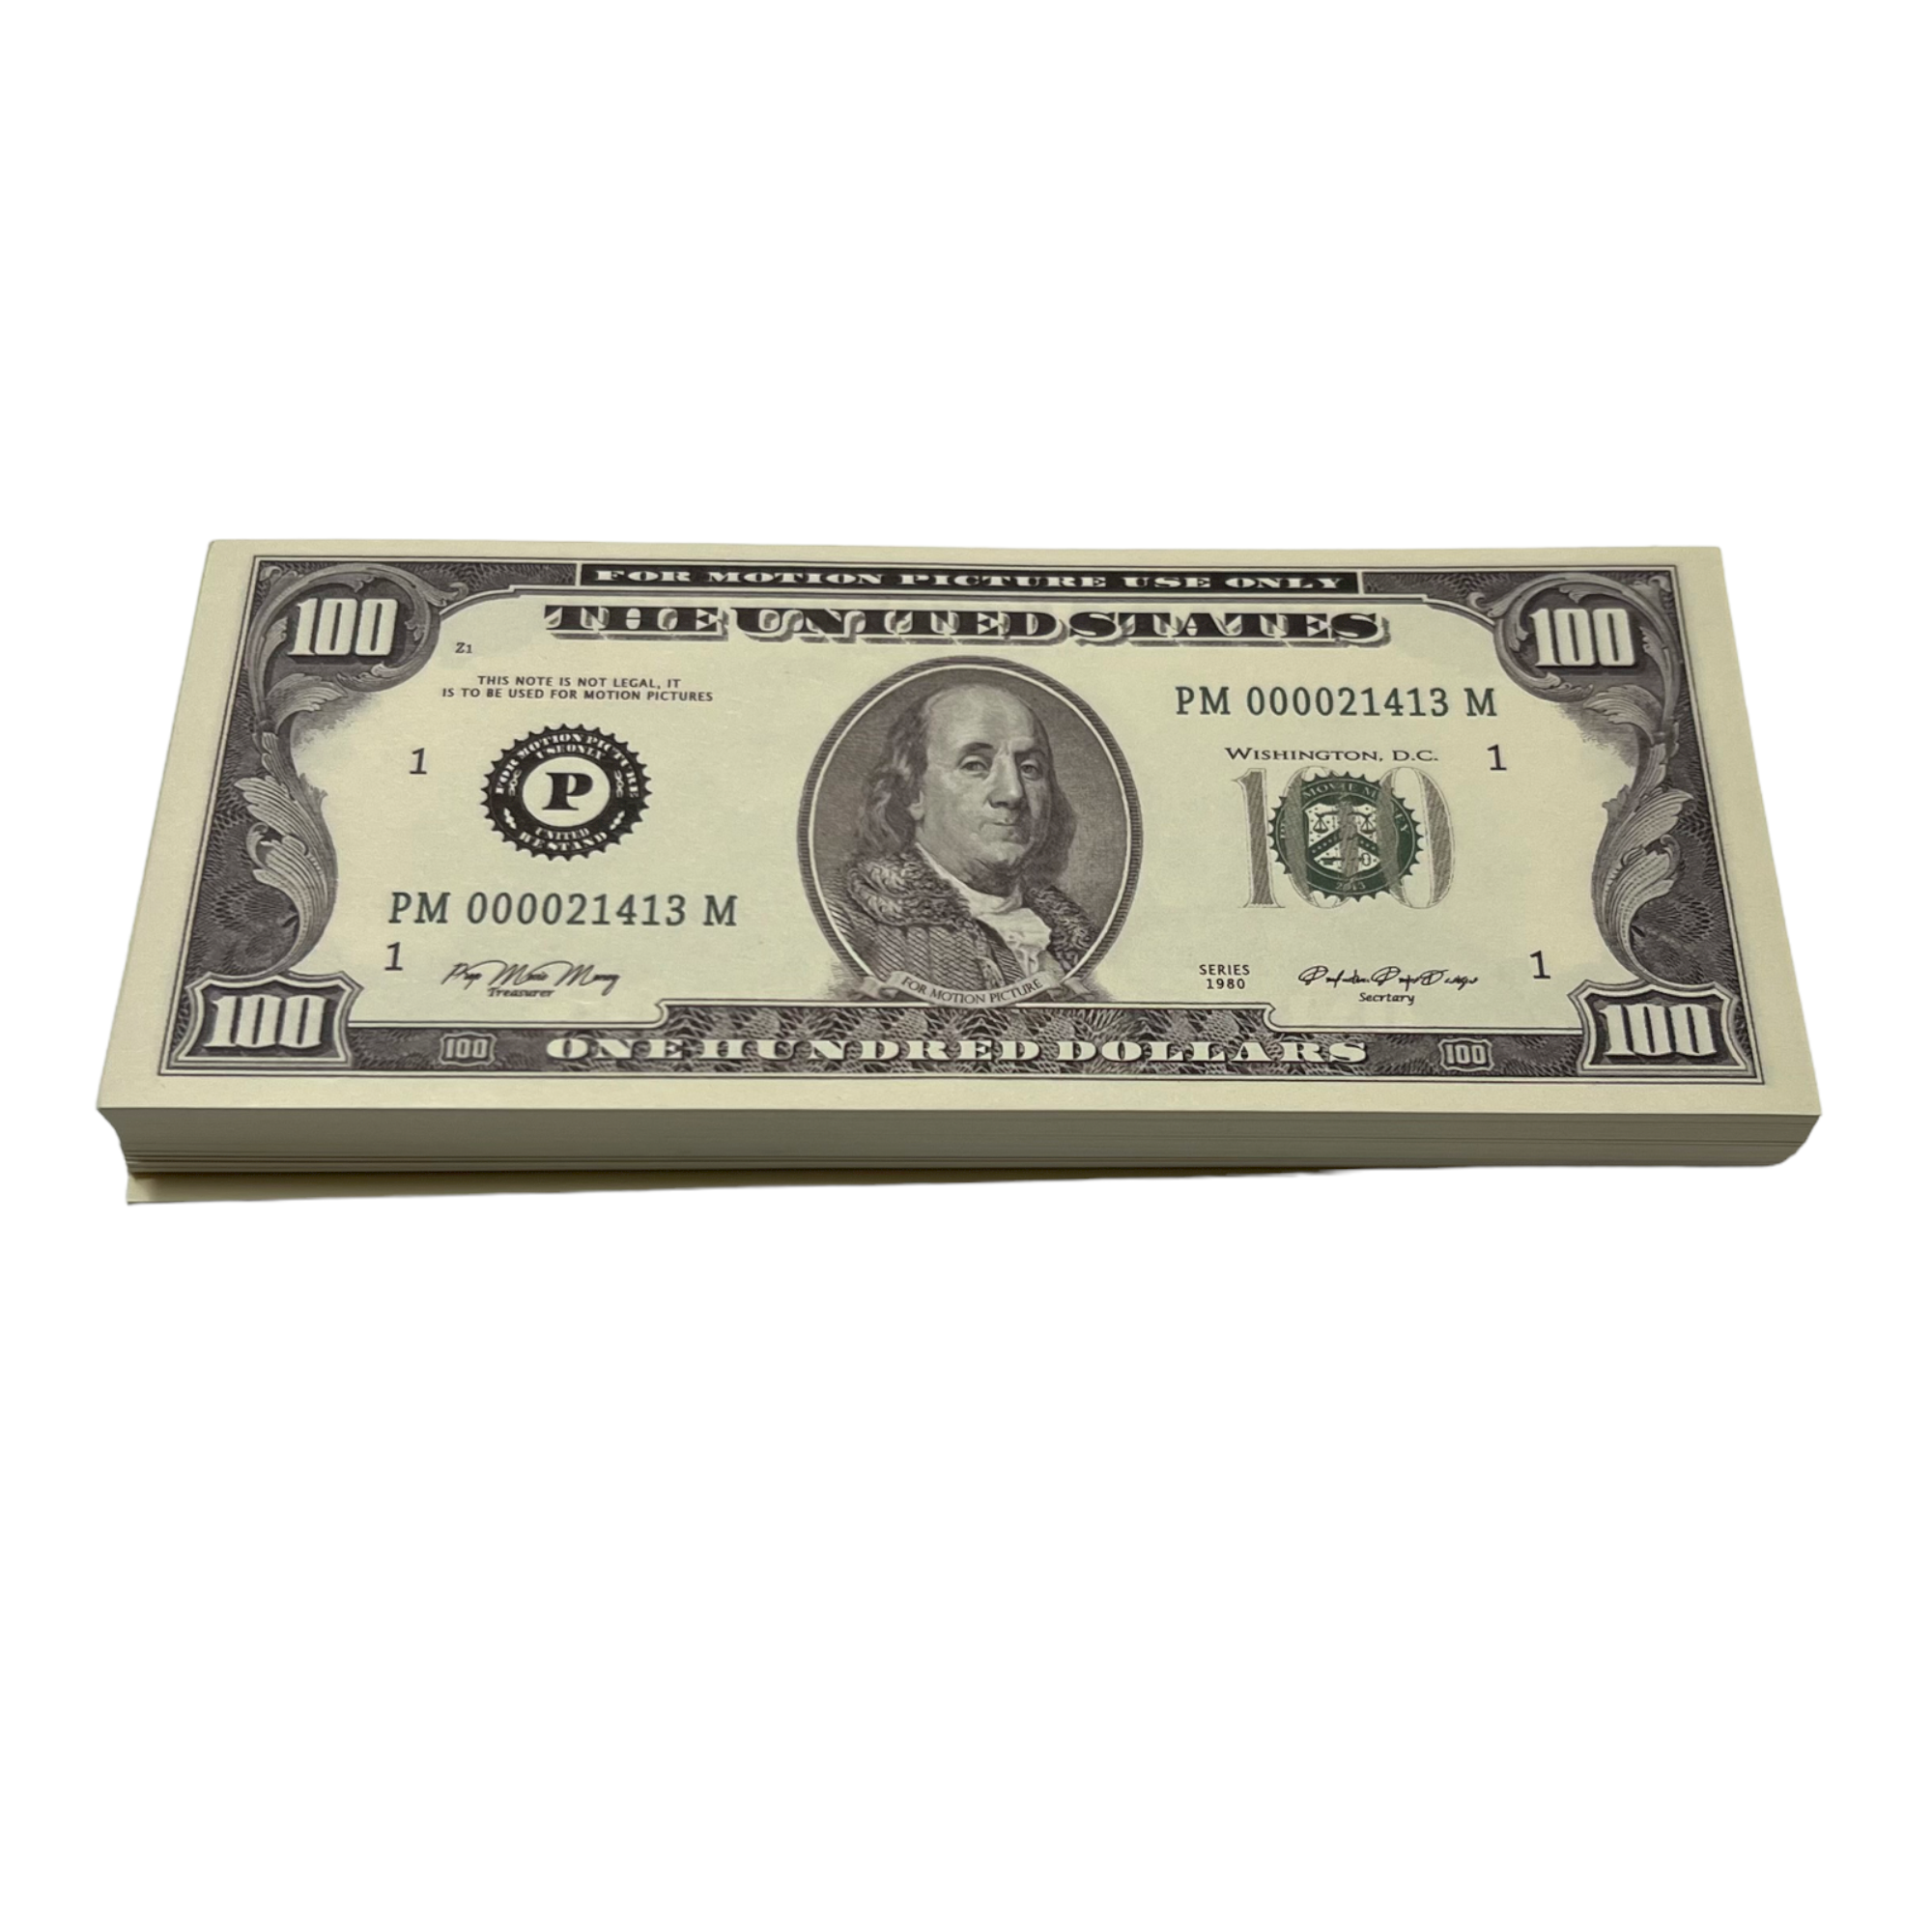 Money Prop - Series 1980s $100 Crisp New $10,000 Full Print Stack